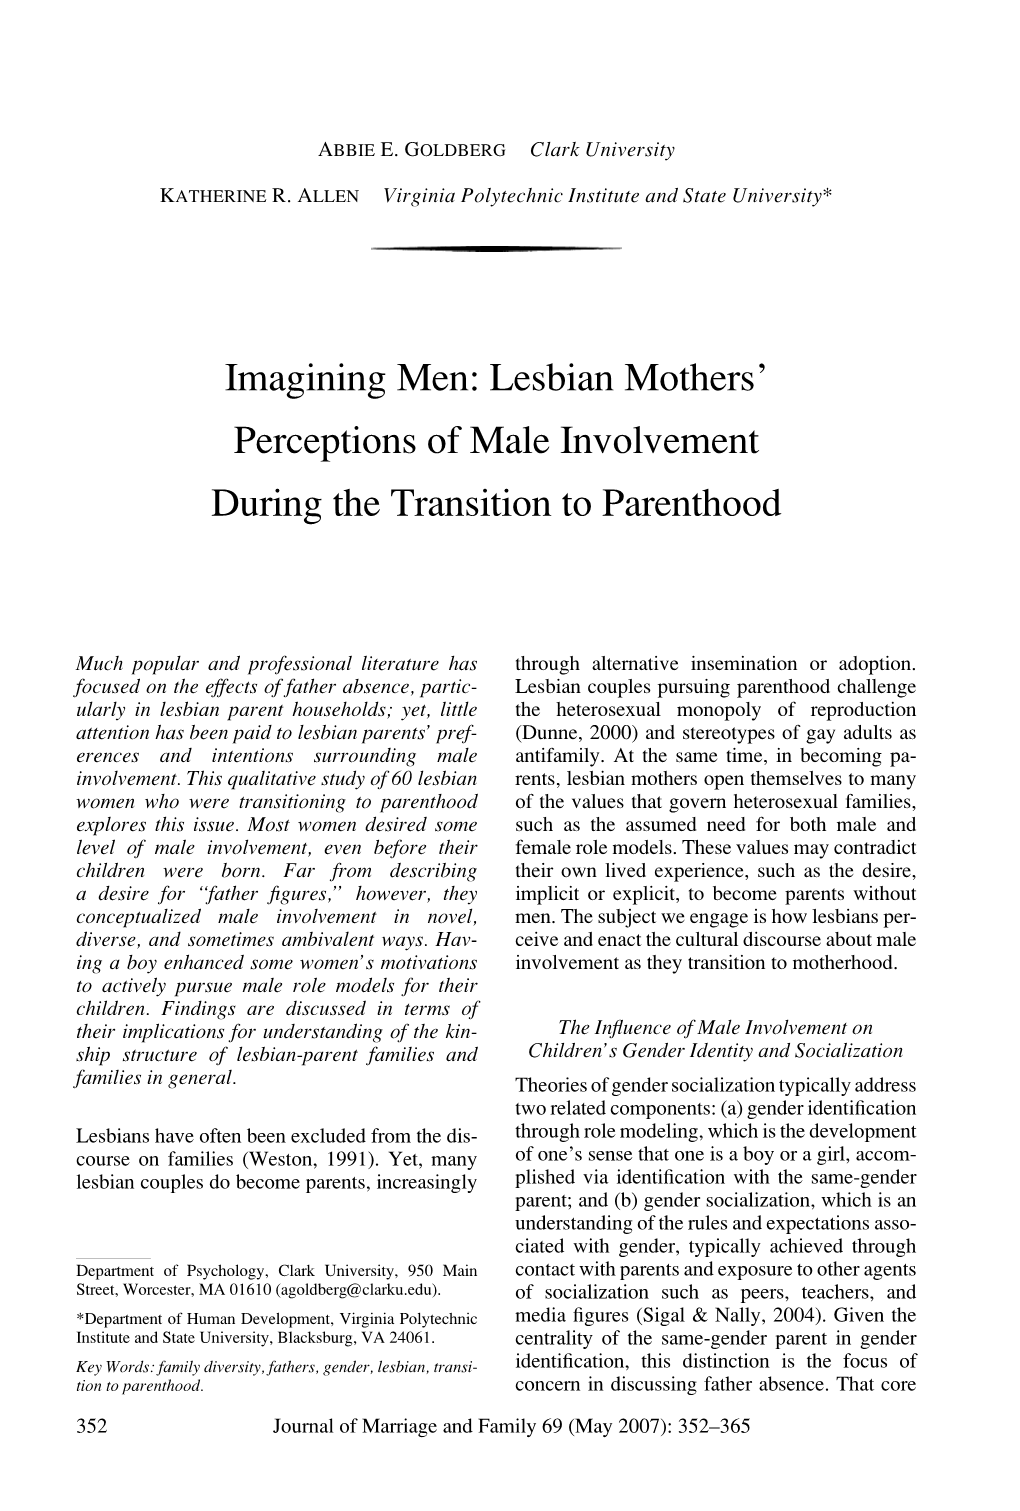 Imagining Men: Lesbian Mothers' Perceptions of Male Involvement